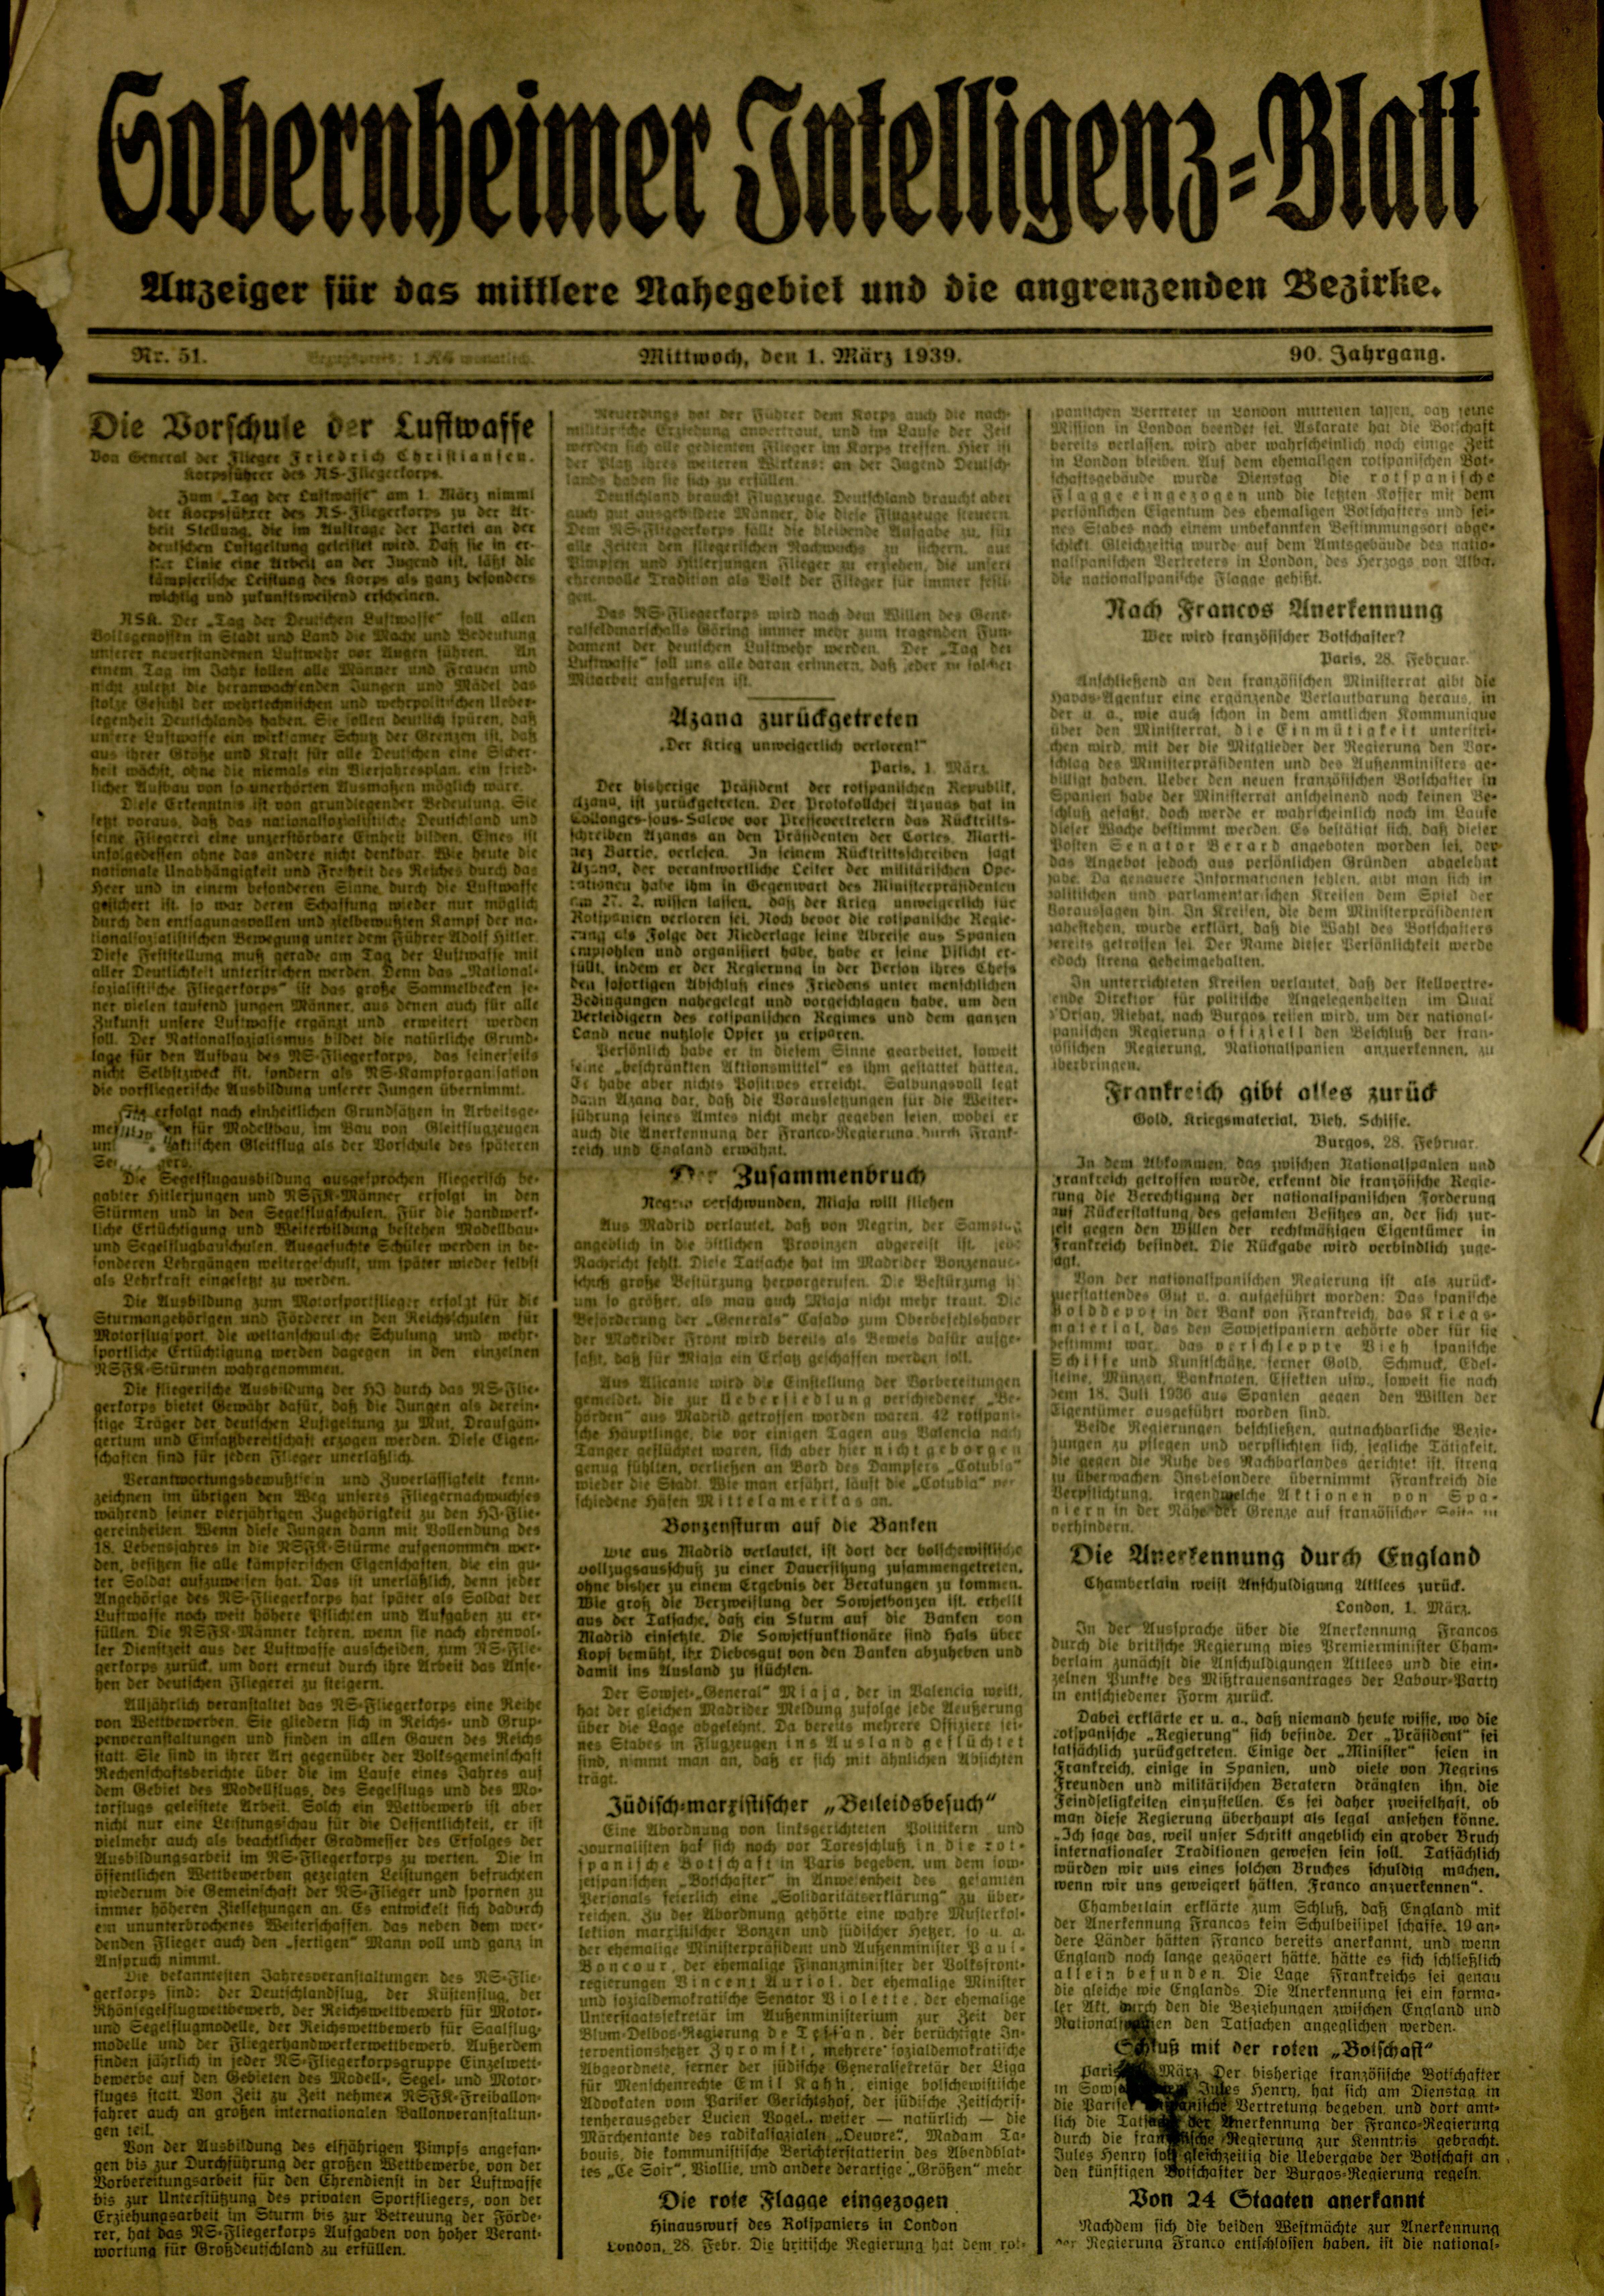 Zeitung: Sobernheimer Intelligenzblatt; März 1939, Jg. 90 Nr. 51 (Heimatmuseum Bad Sobernheim CC BY-NC-SA)